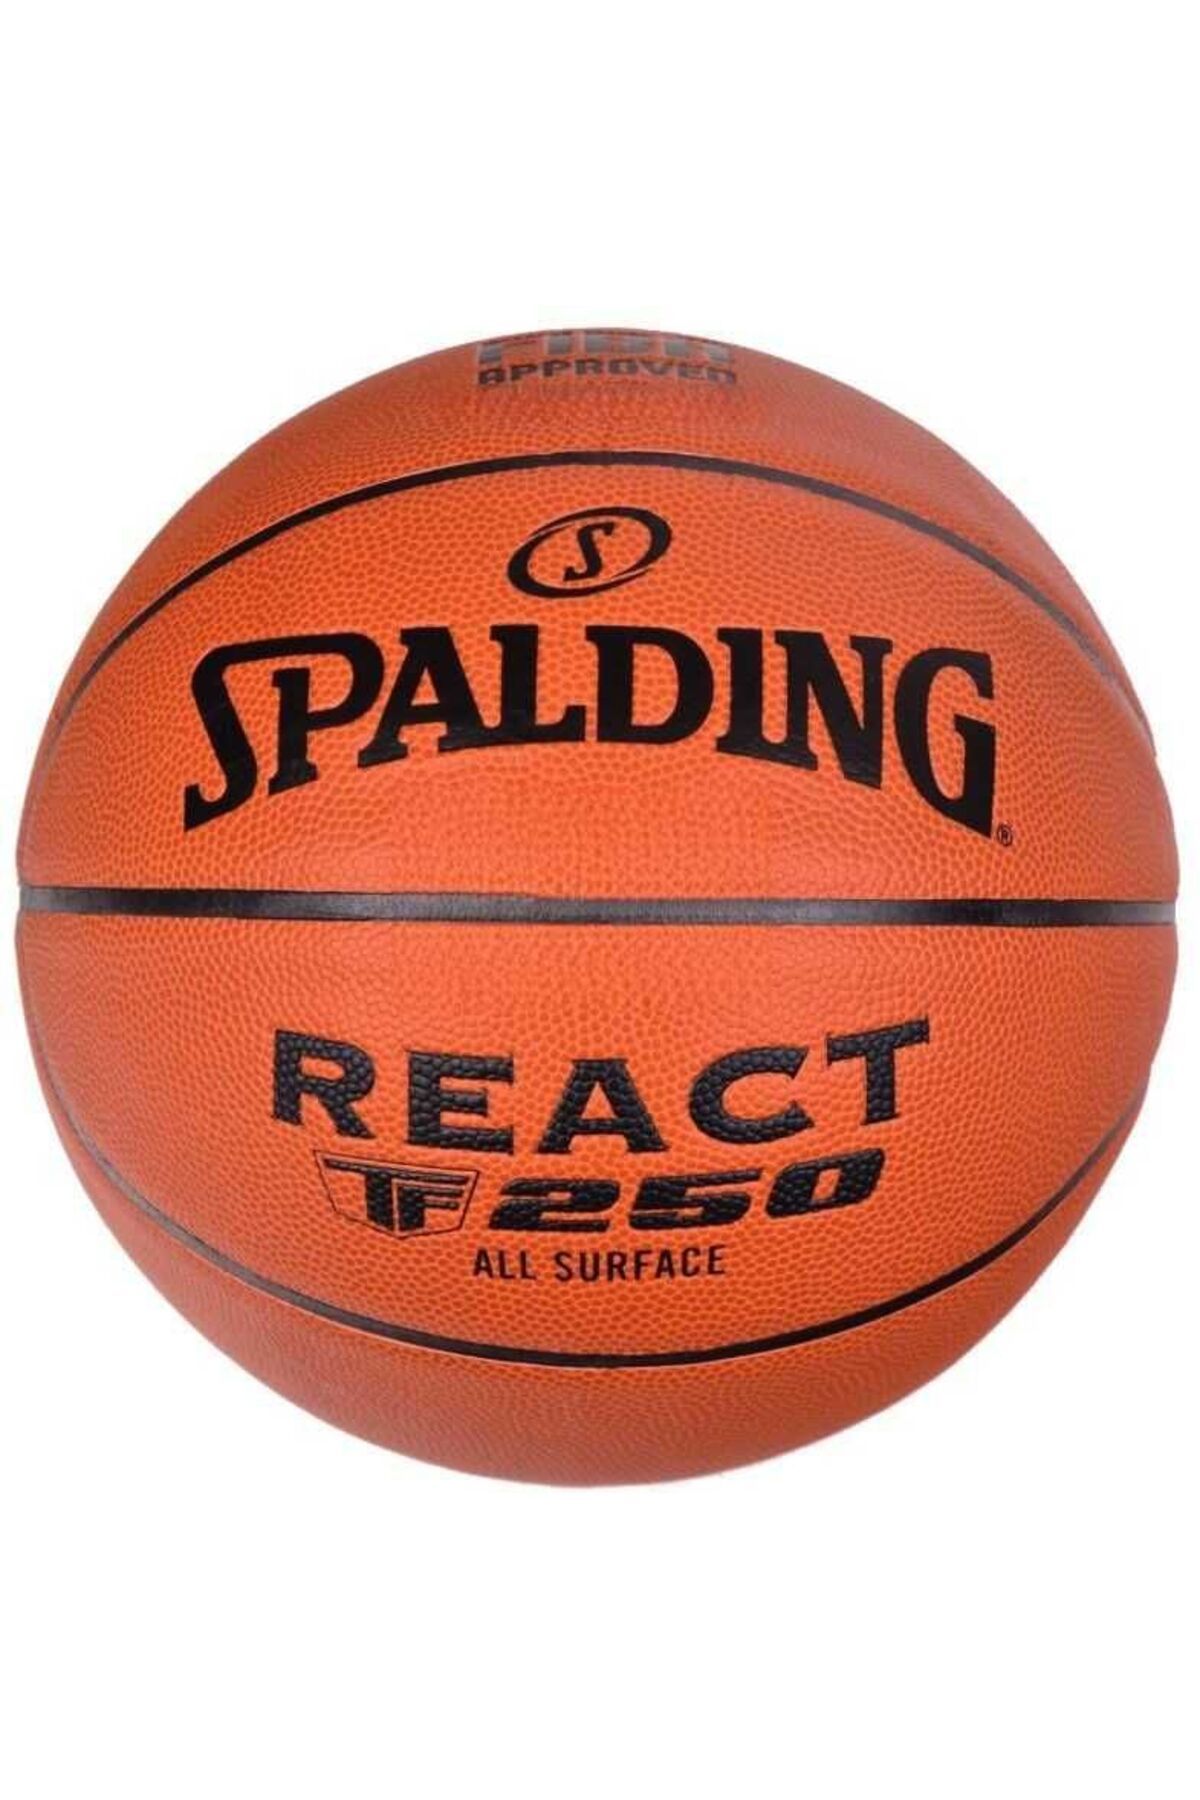 Spalding React Fiba Tf-250 Sz6 Basketbol Topu 76968z